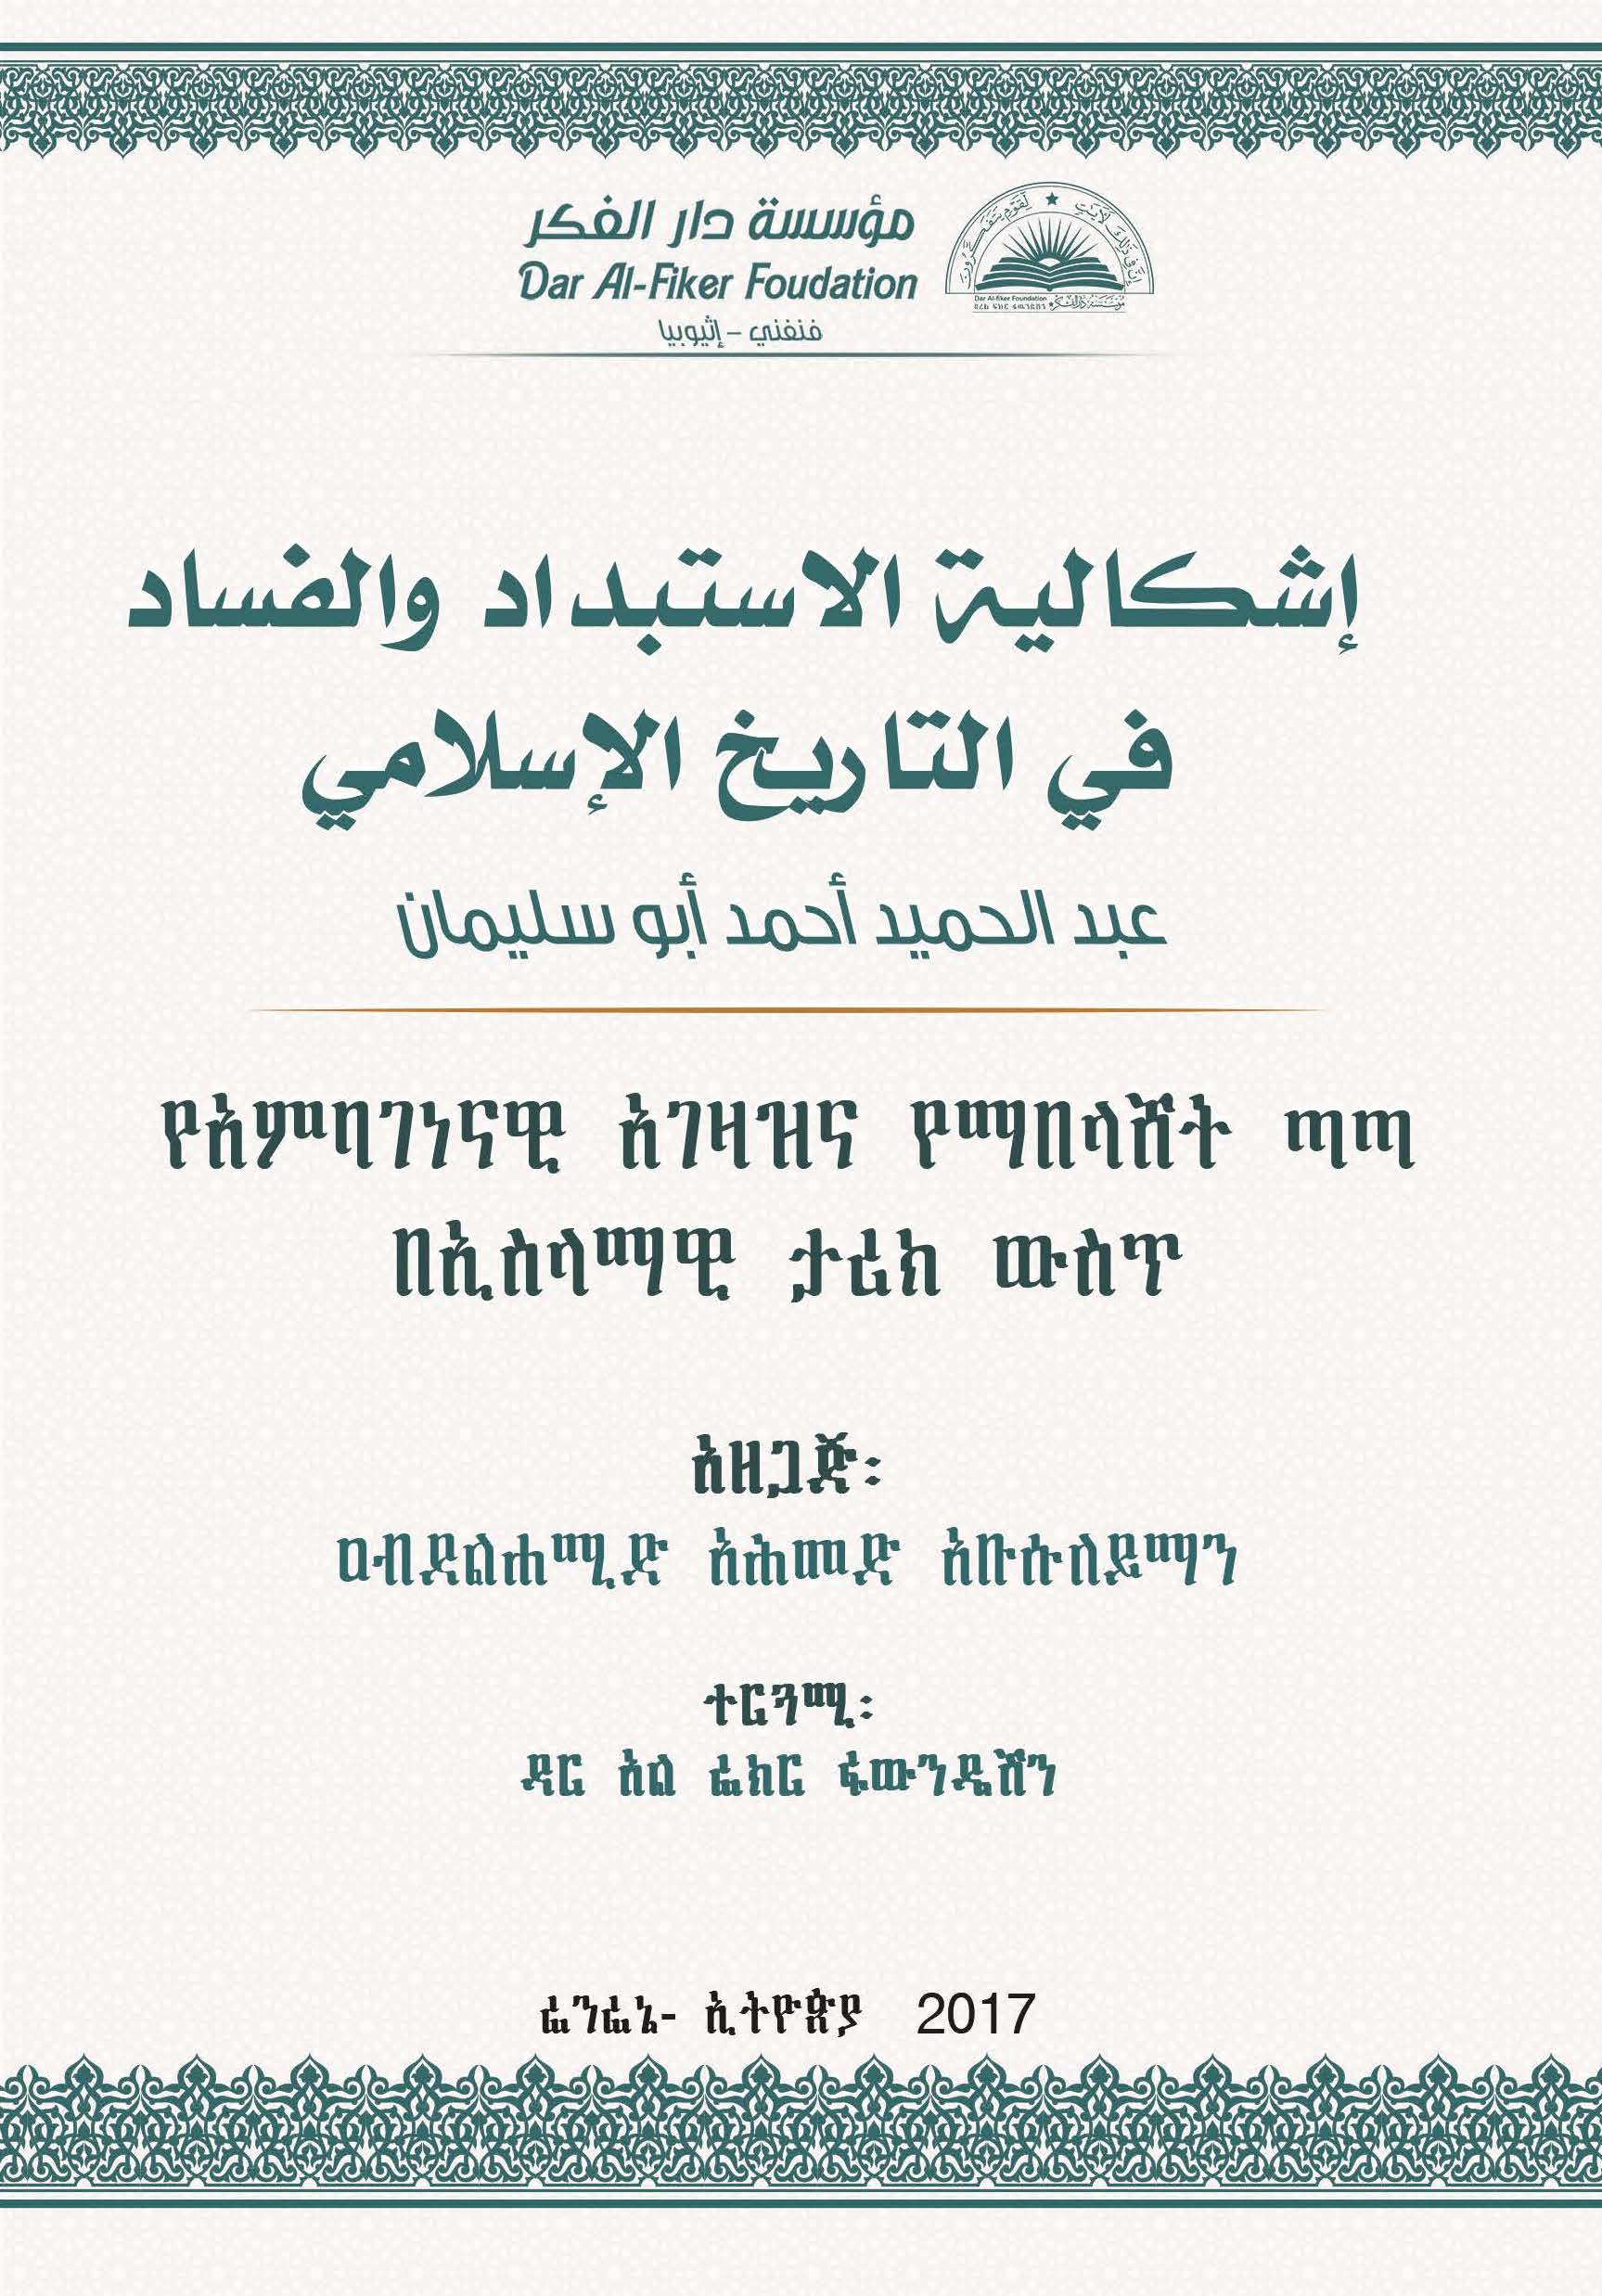 Amharic: የአምባገነናዊ አገዛዝና የማበላሸት ጣጣ በኢስላማዊ ታሪክ ውስጥ (mushkilat aliastibdad walfasad fi altaarikh al’iislamii)